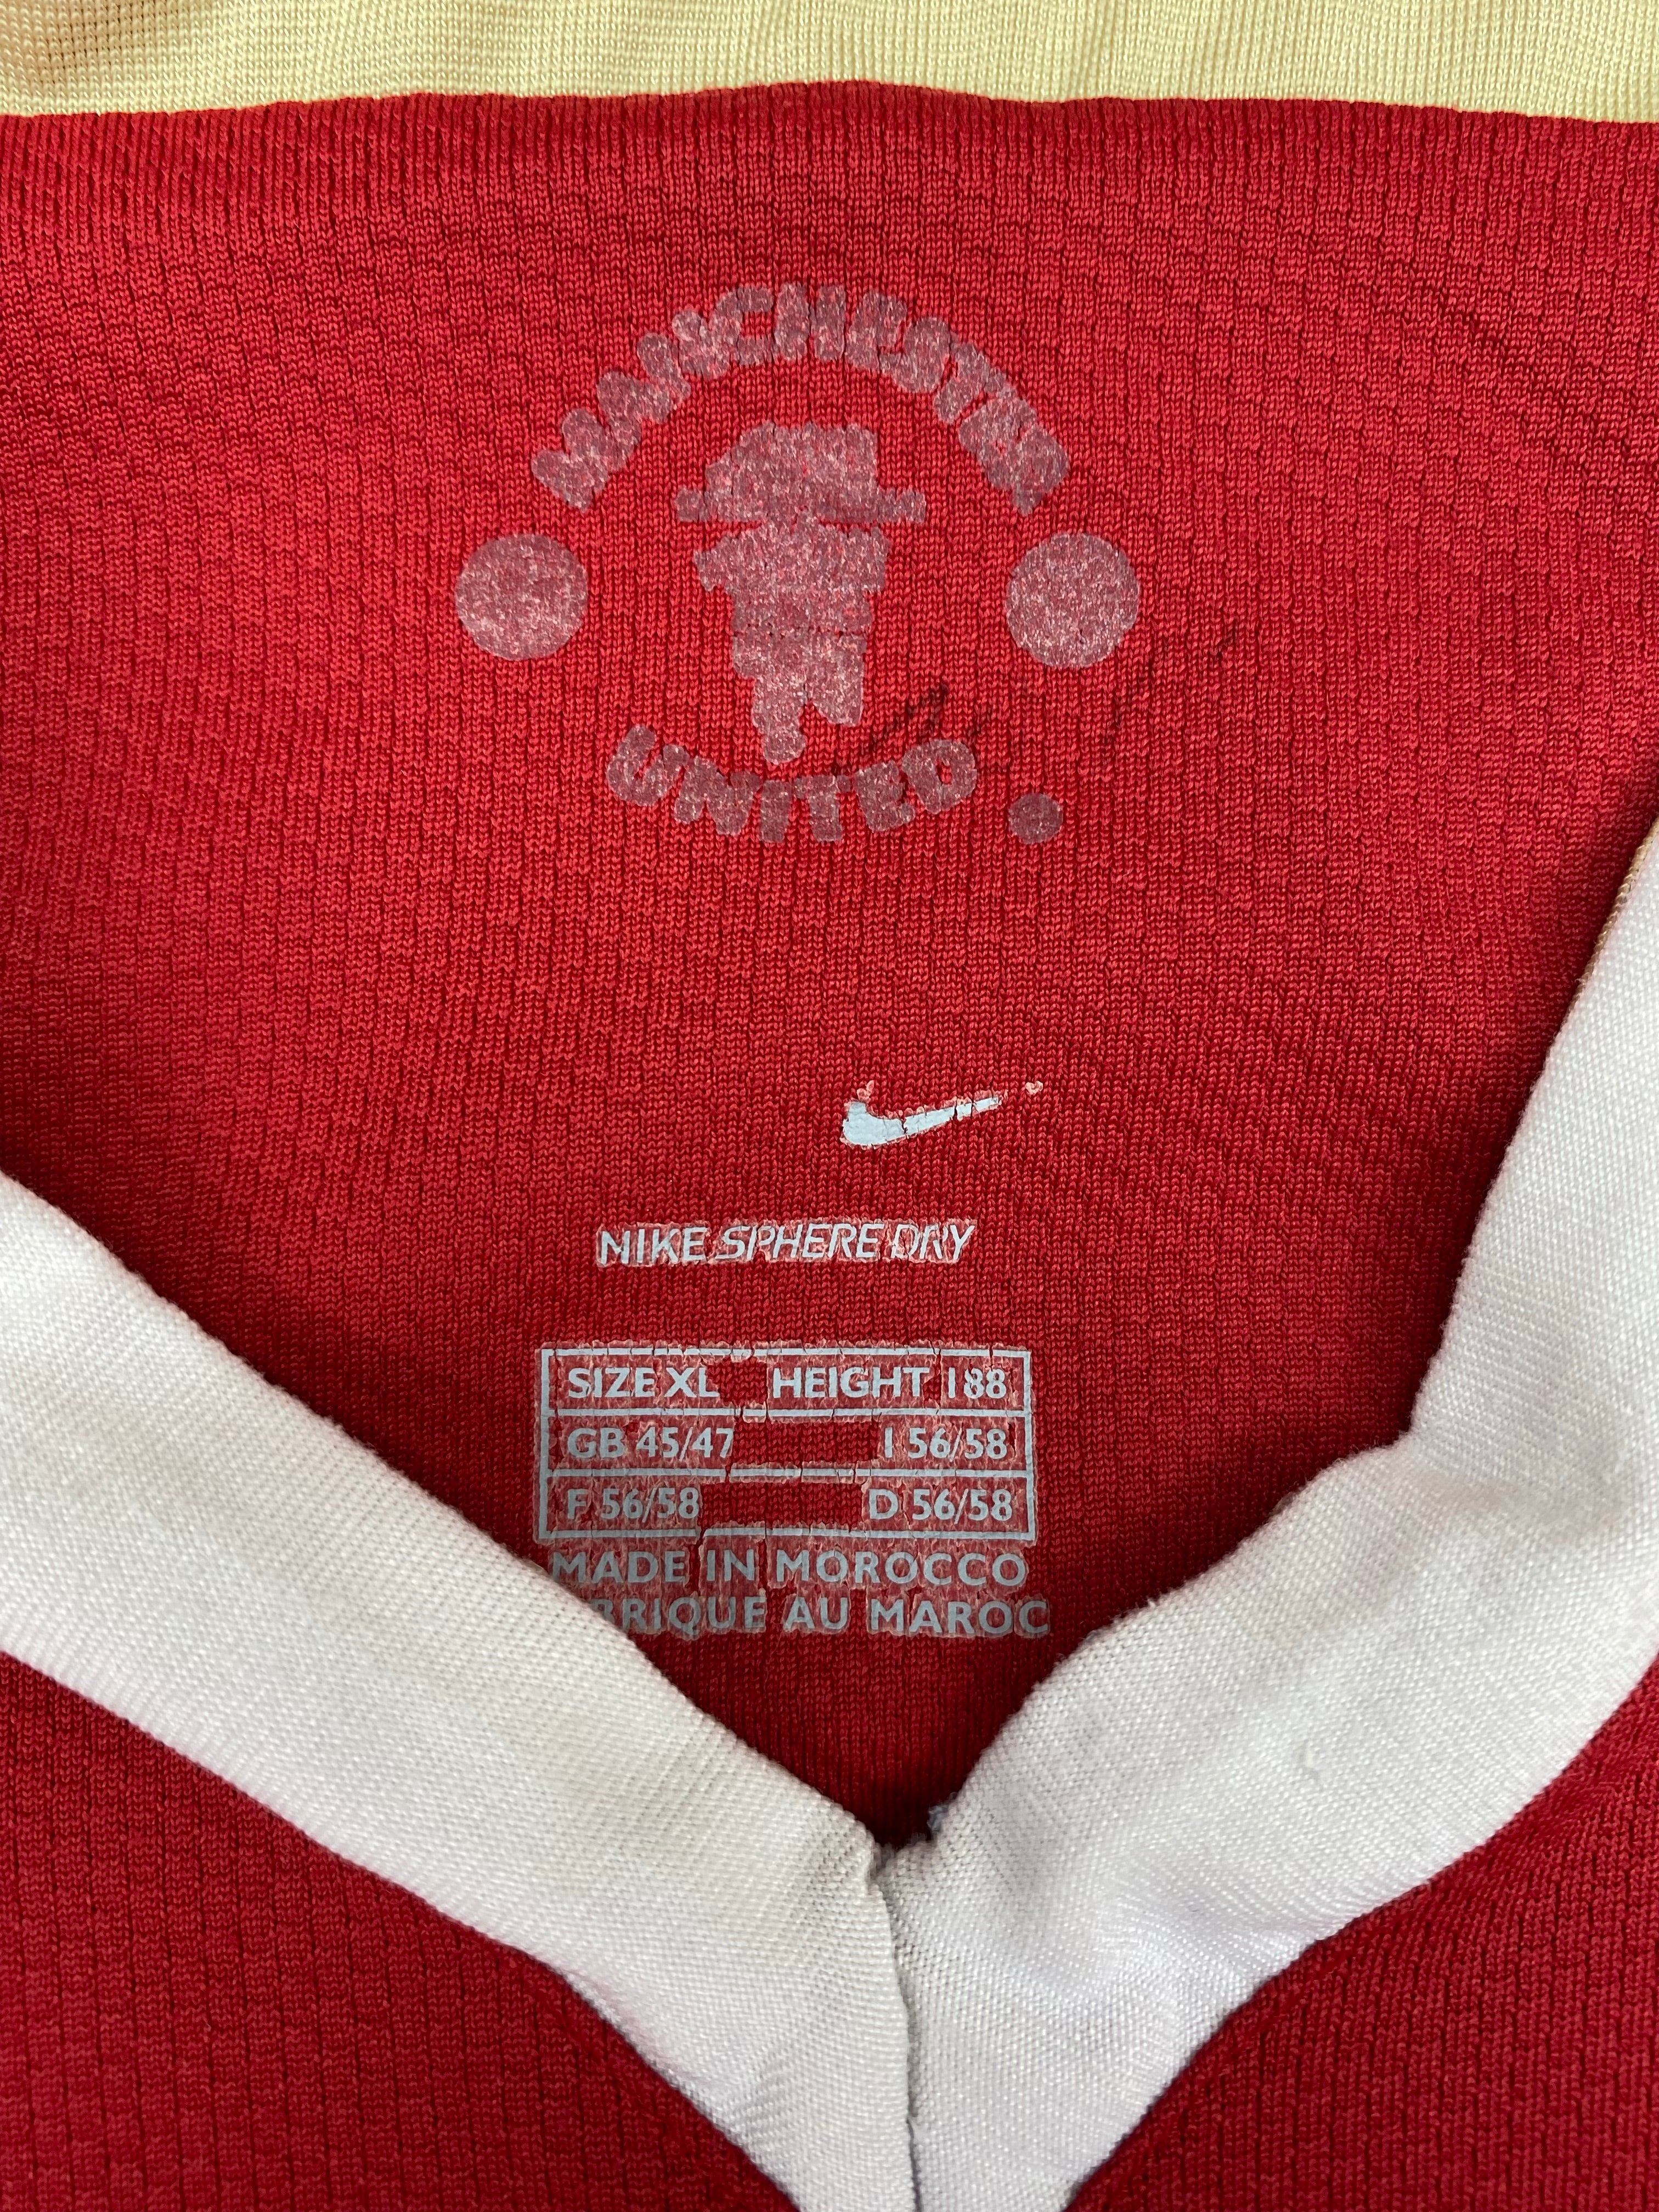 Nike - Camiseta Cristiano Ronaldo Manchester United Local